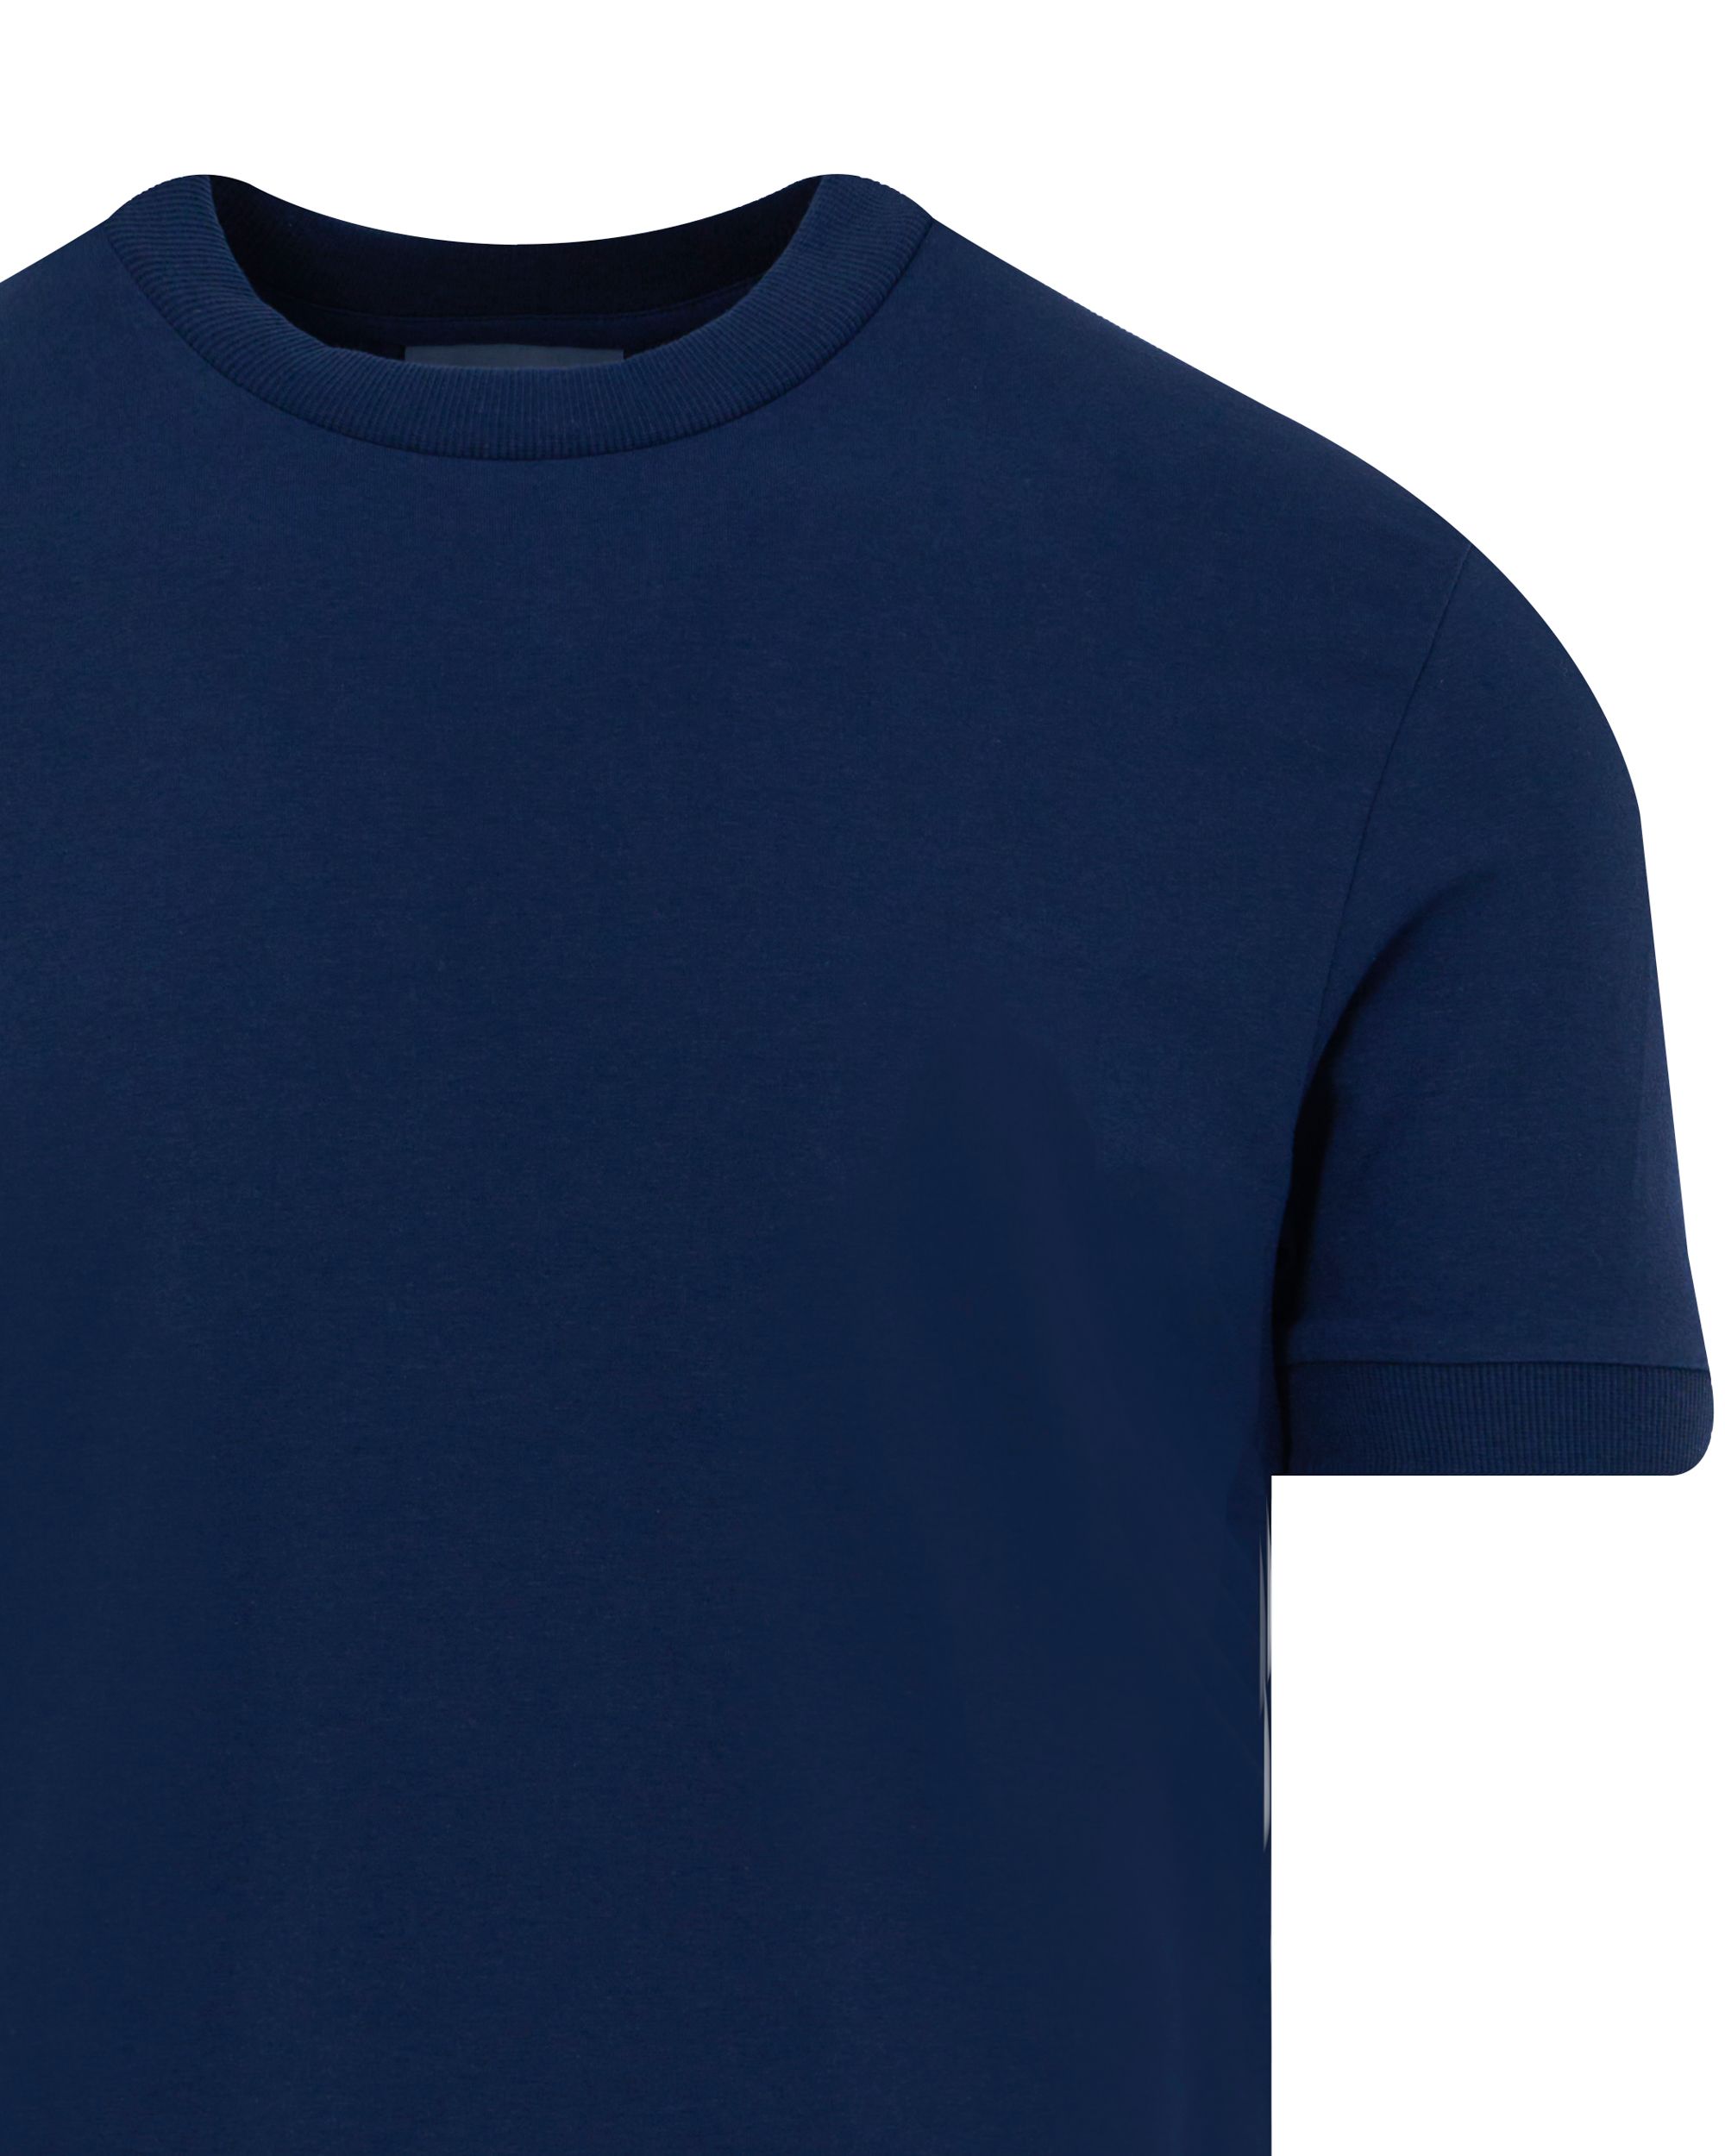 Drykorn Anton T-shirt KM Blauw 080171-001-L